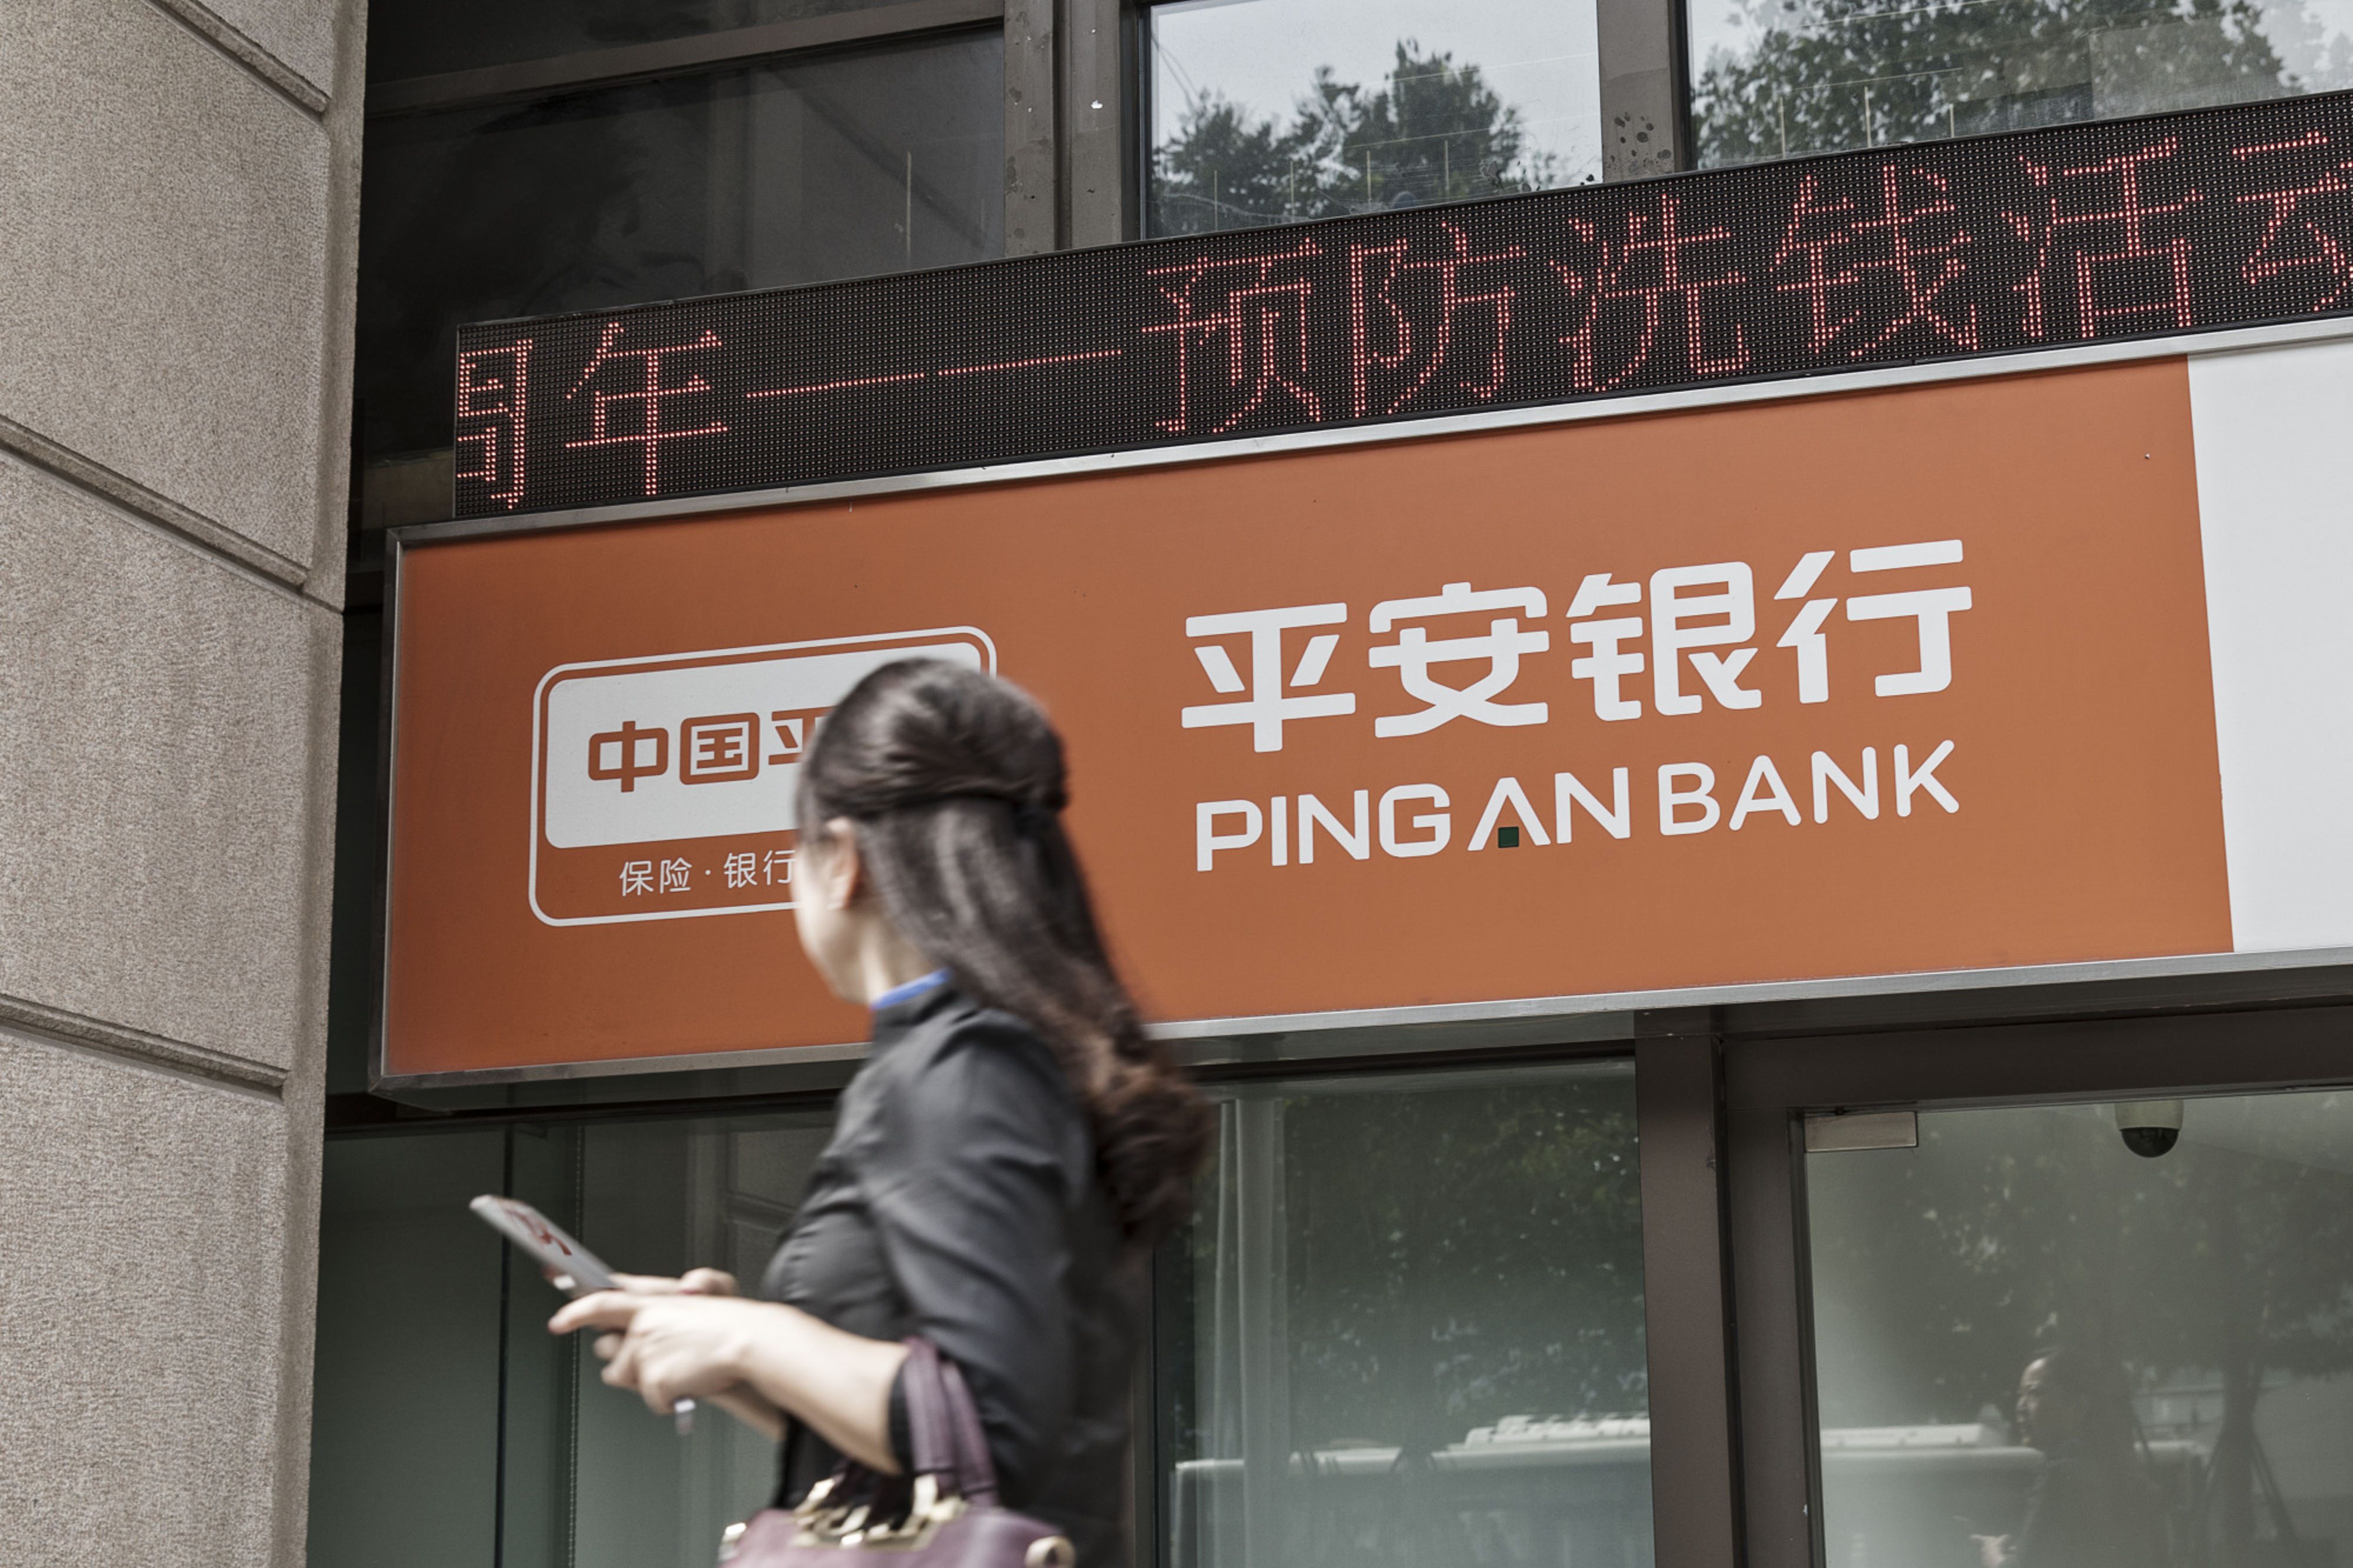 Ping an bank. Pingan китайская компания. Компания Ping an insurance. China Life insurance и Ping an insurance. Ping an insurance Group logo.